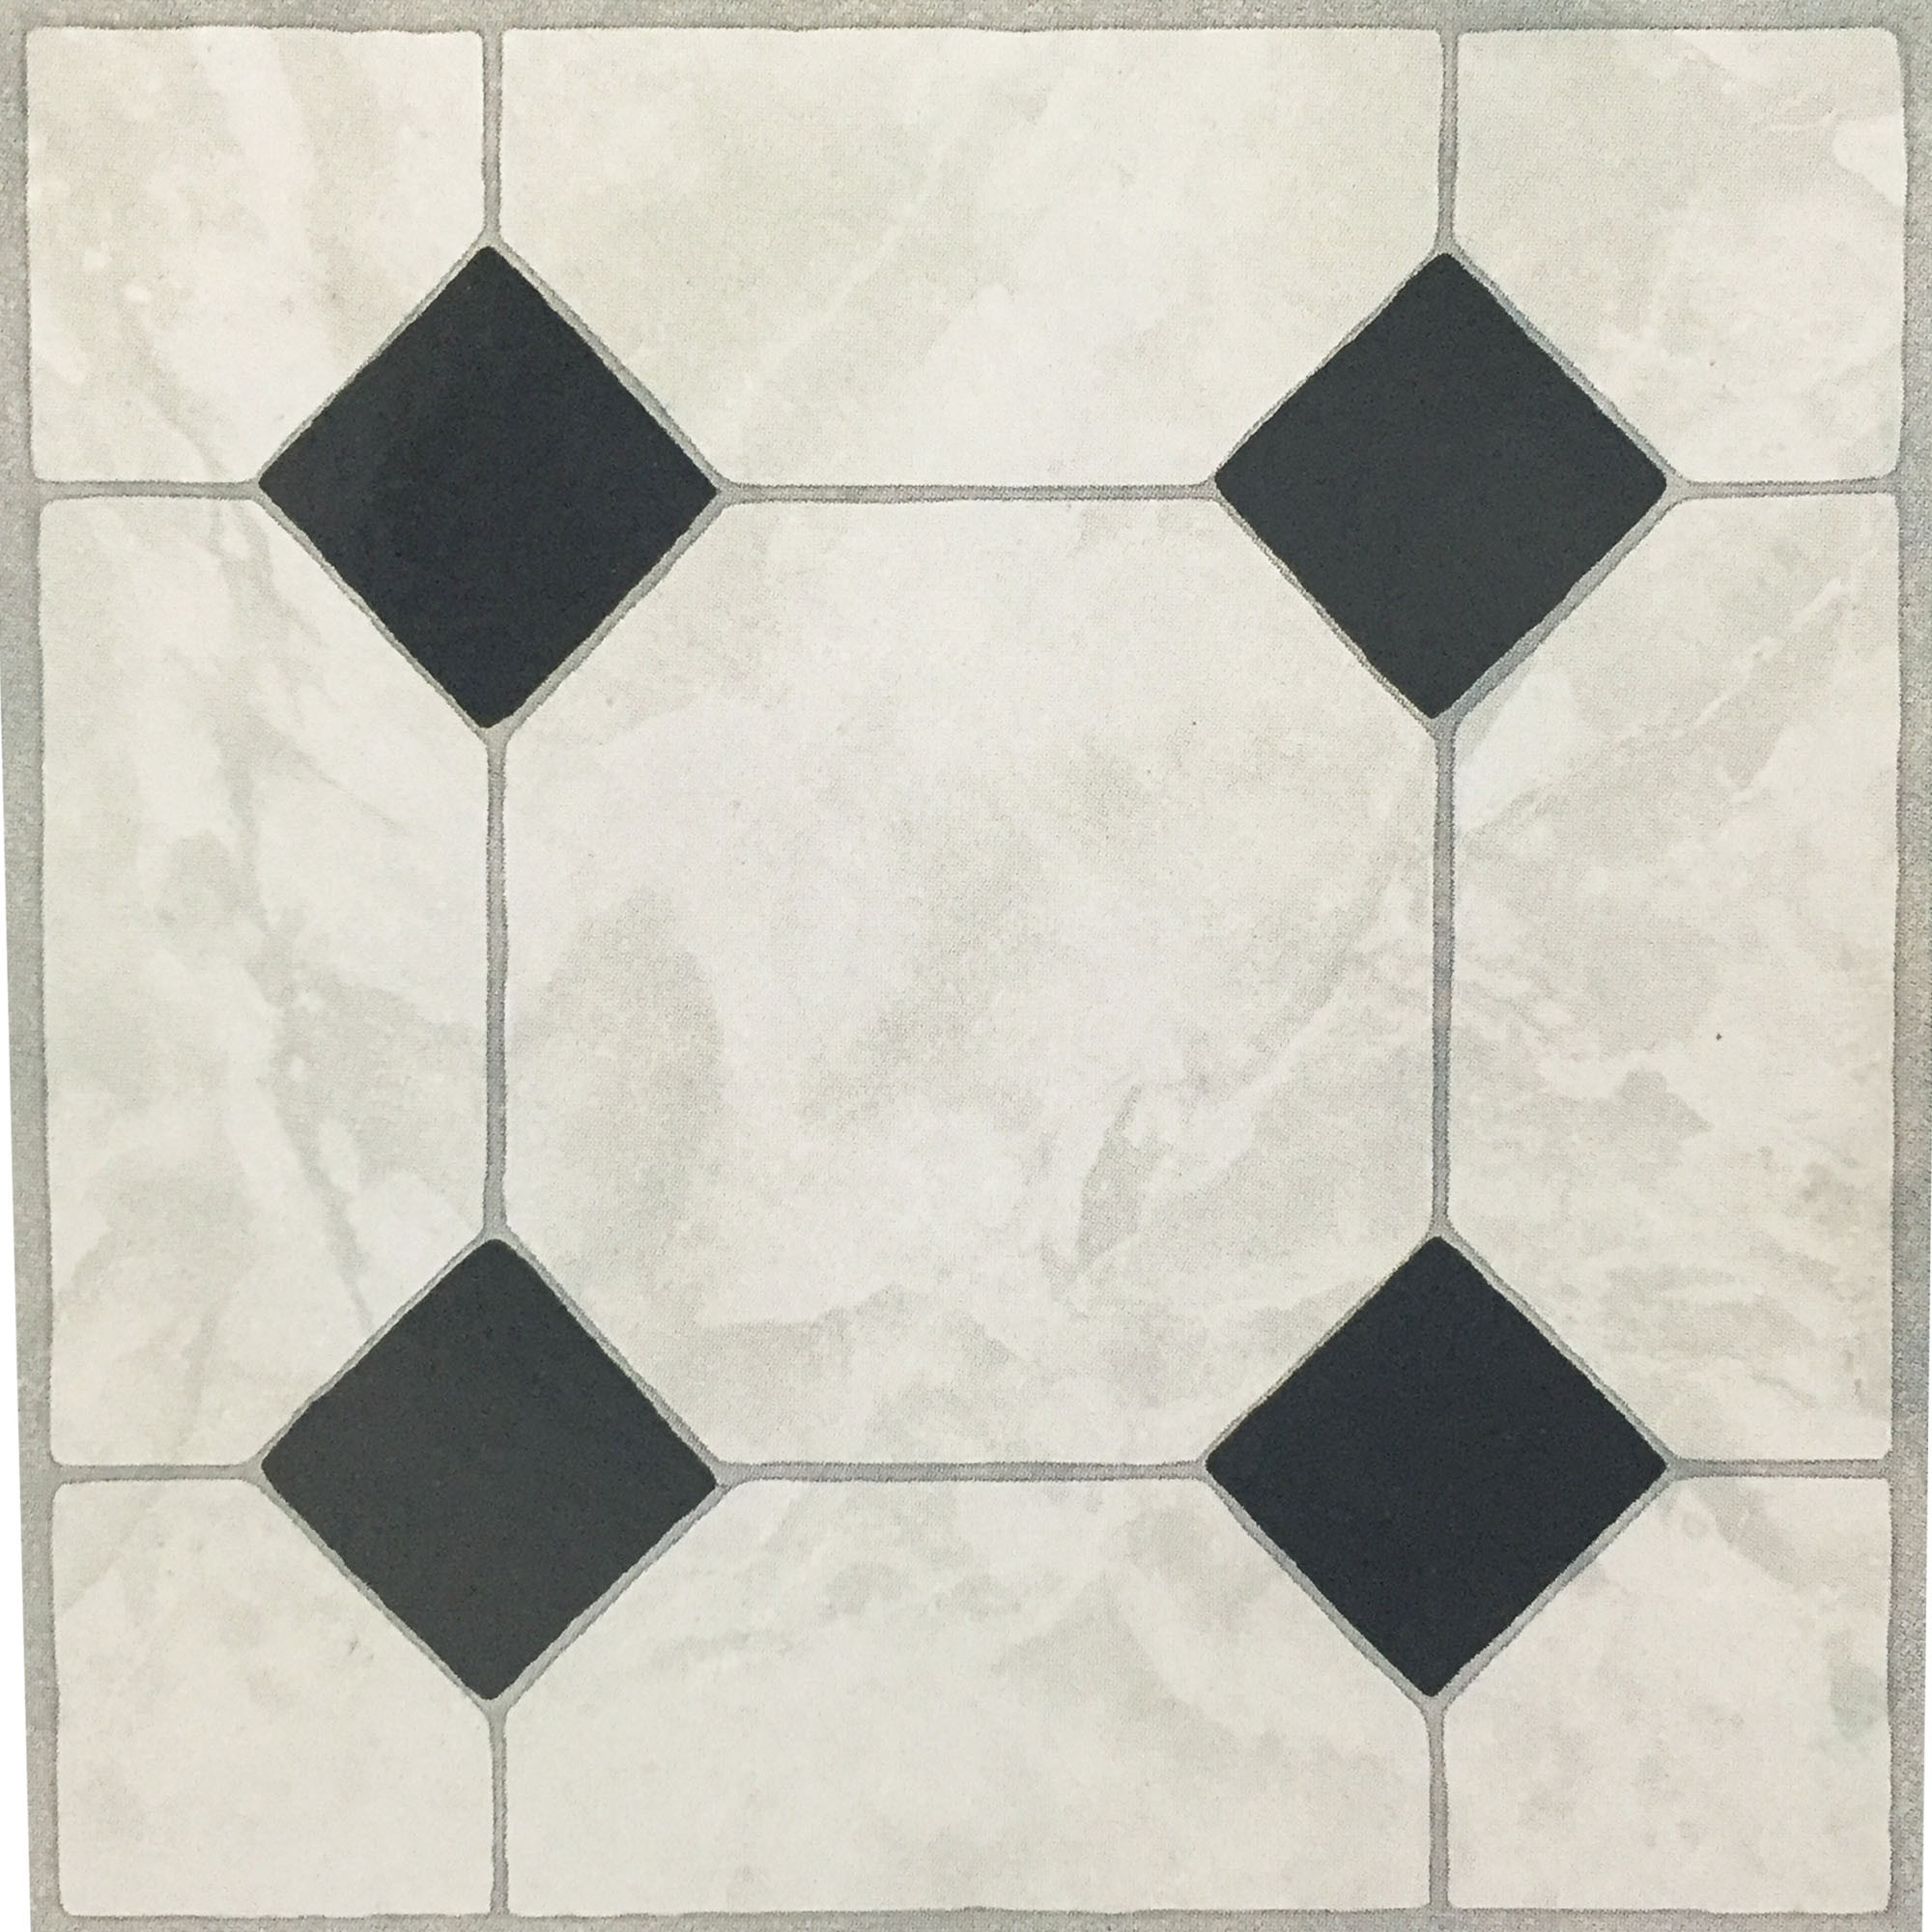 Adhesive Bathroom Floor Tiles
 3 x CERAMIC EFFECT VINYL FLOOR TILES SELF ADHESIVE